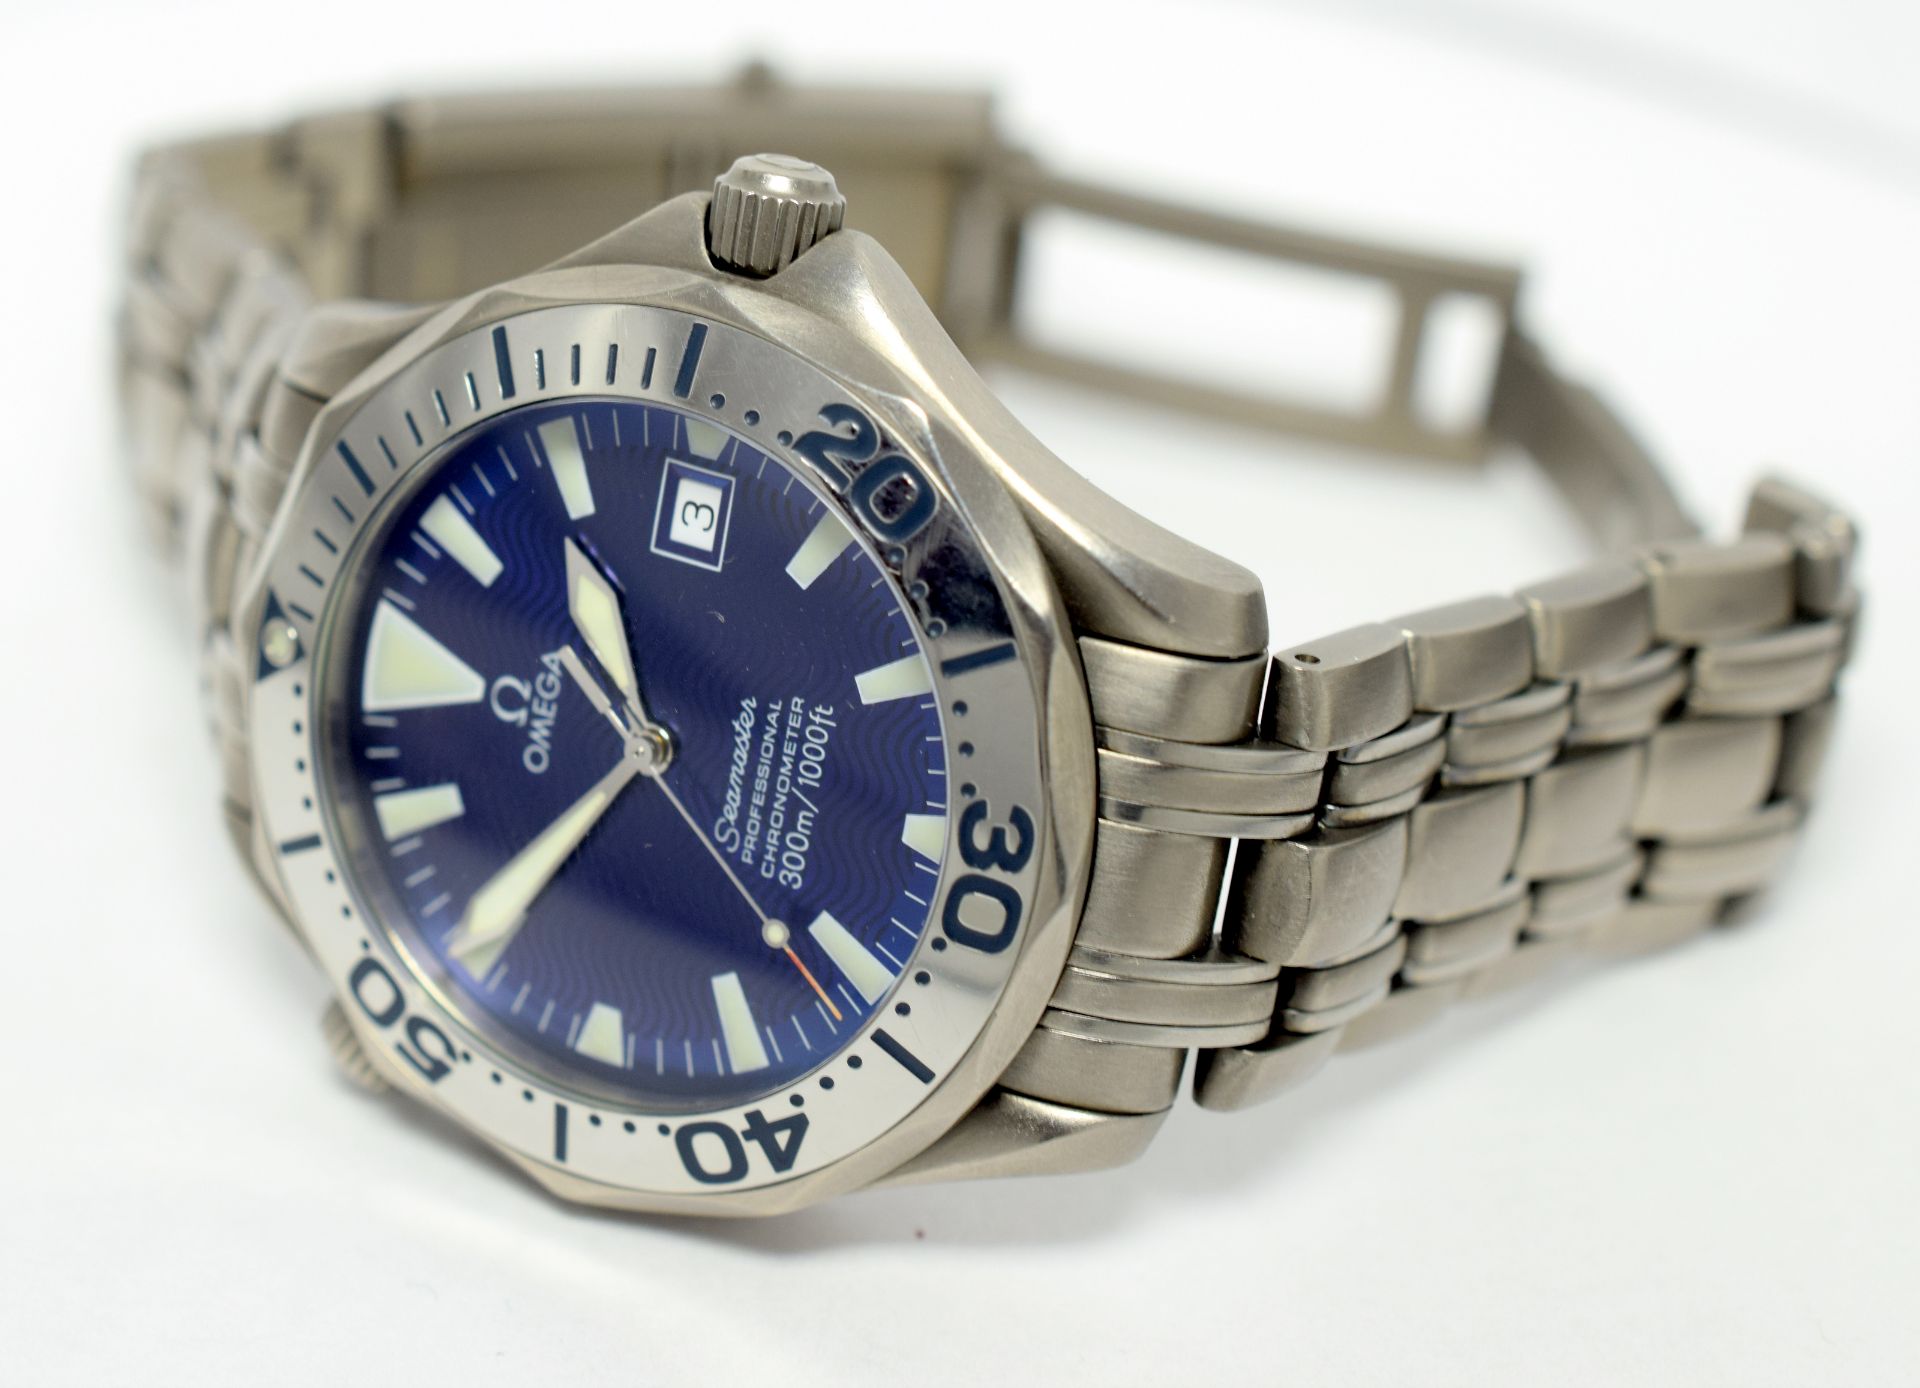 Omega Seamaster Professional Chronometer 300mts/1000ft In Titanium On Titanium Bracelet - Image 2 of 10